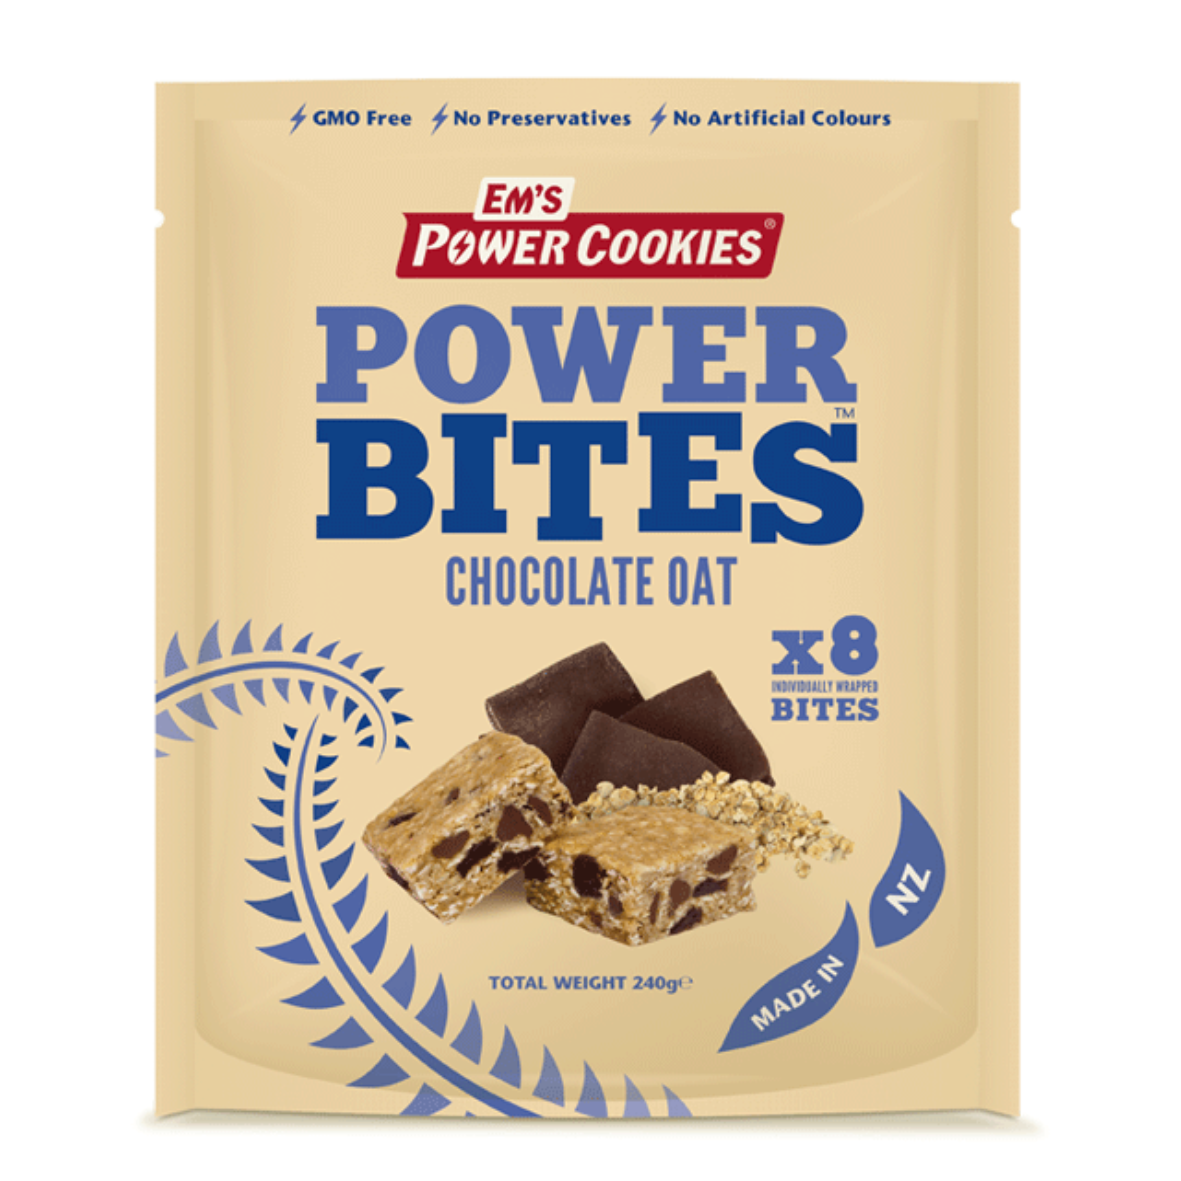 Em's Power Cookies chocolate Oat Power Bites